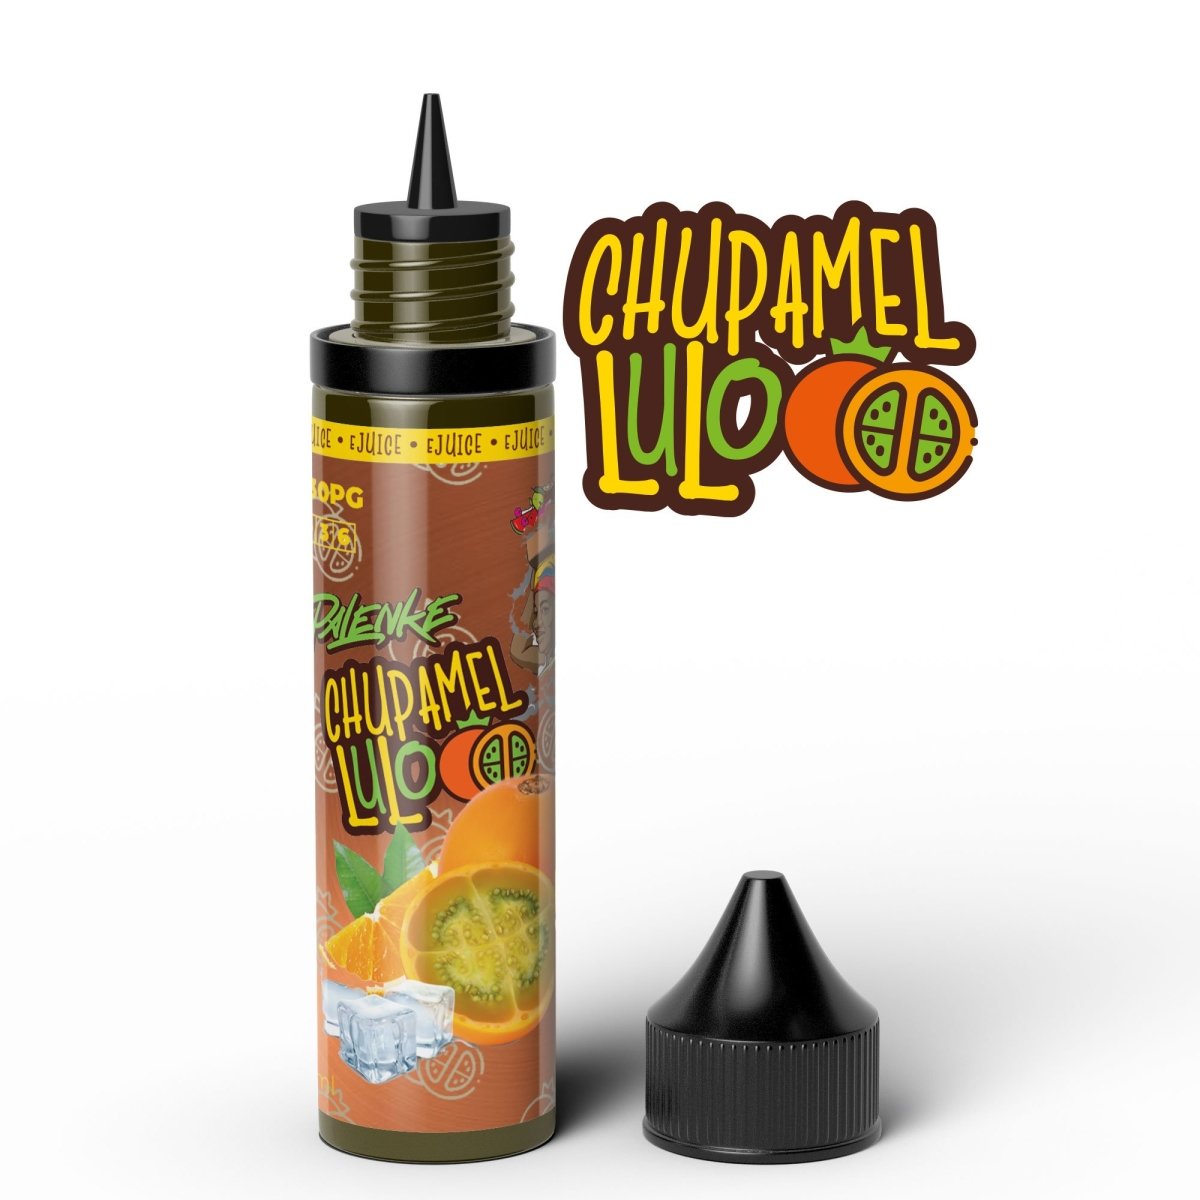 Chupamel Lulo - Palenke Ejuice - Eliquid - DIY VAPE SHOP | BL-PLK-CHL-03